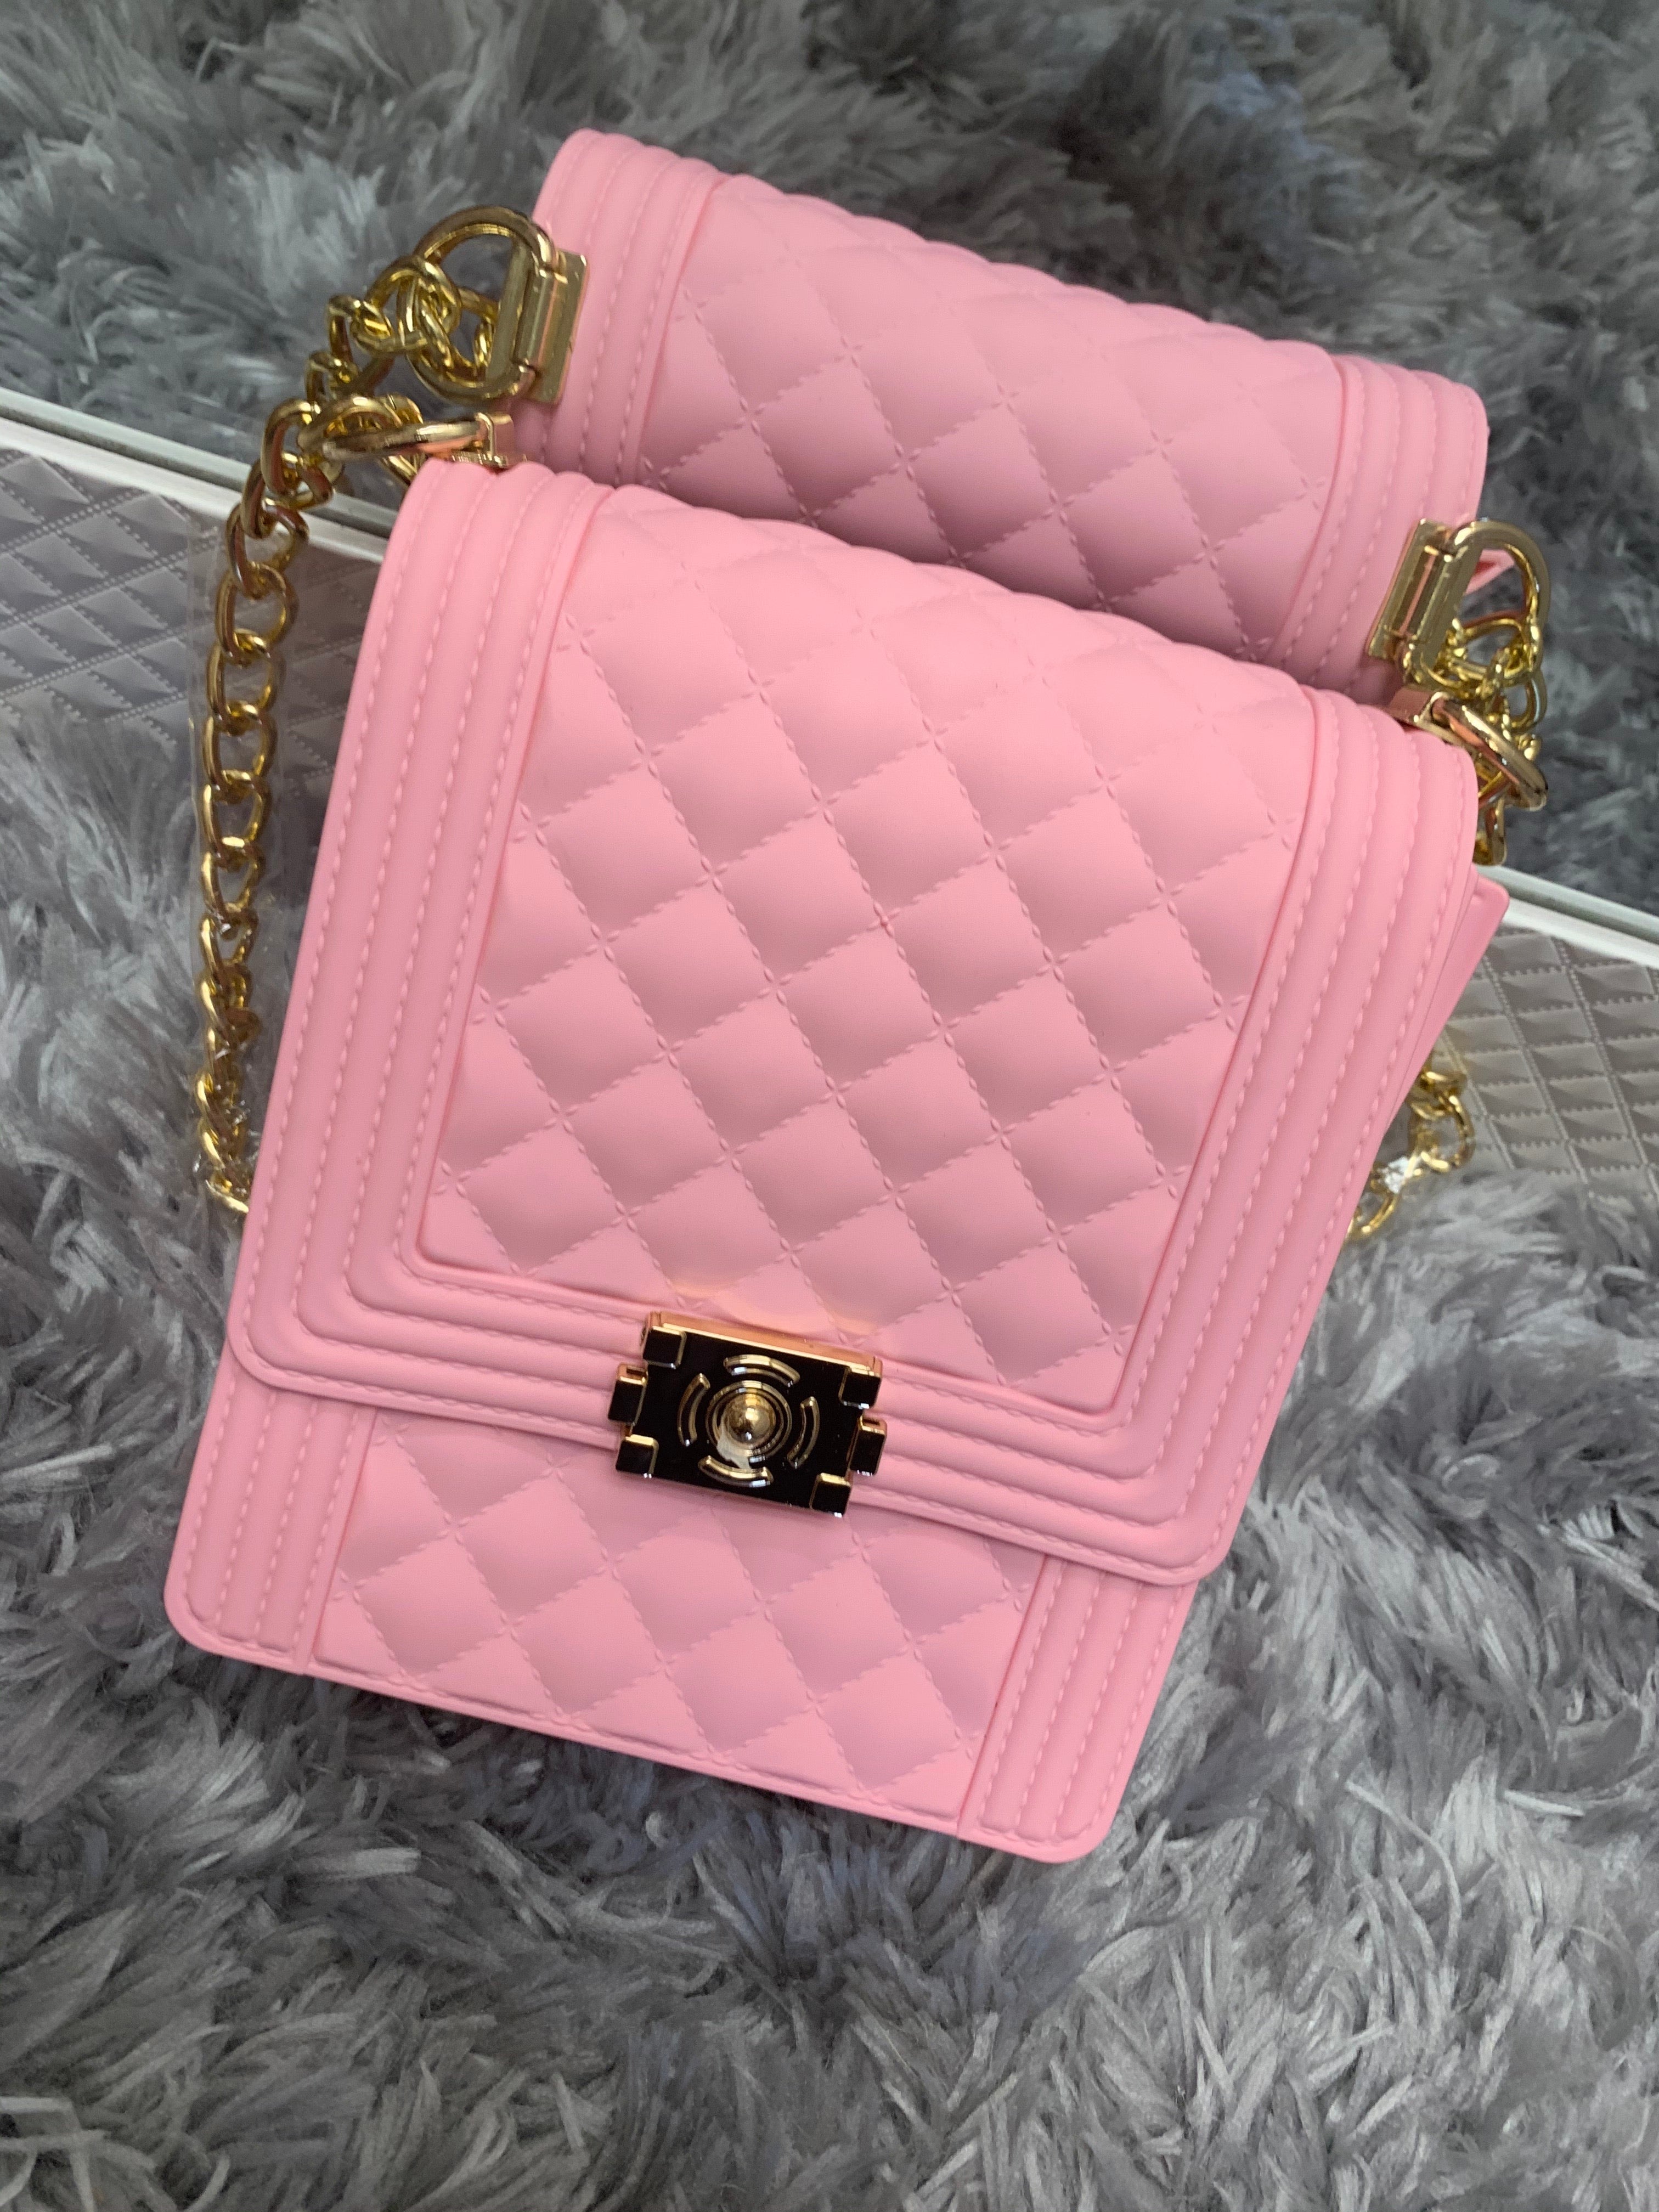 That bag (light pink)